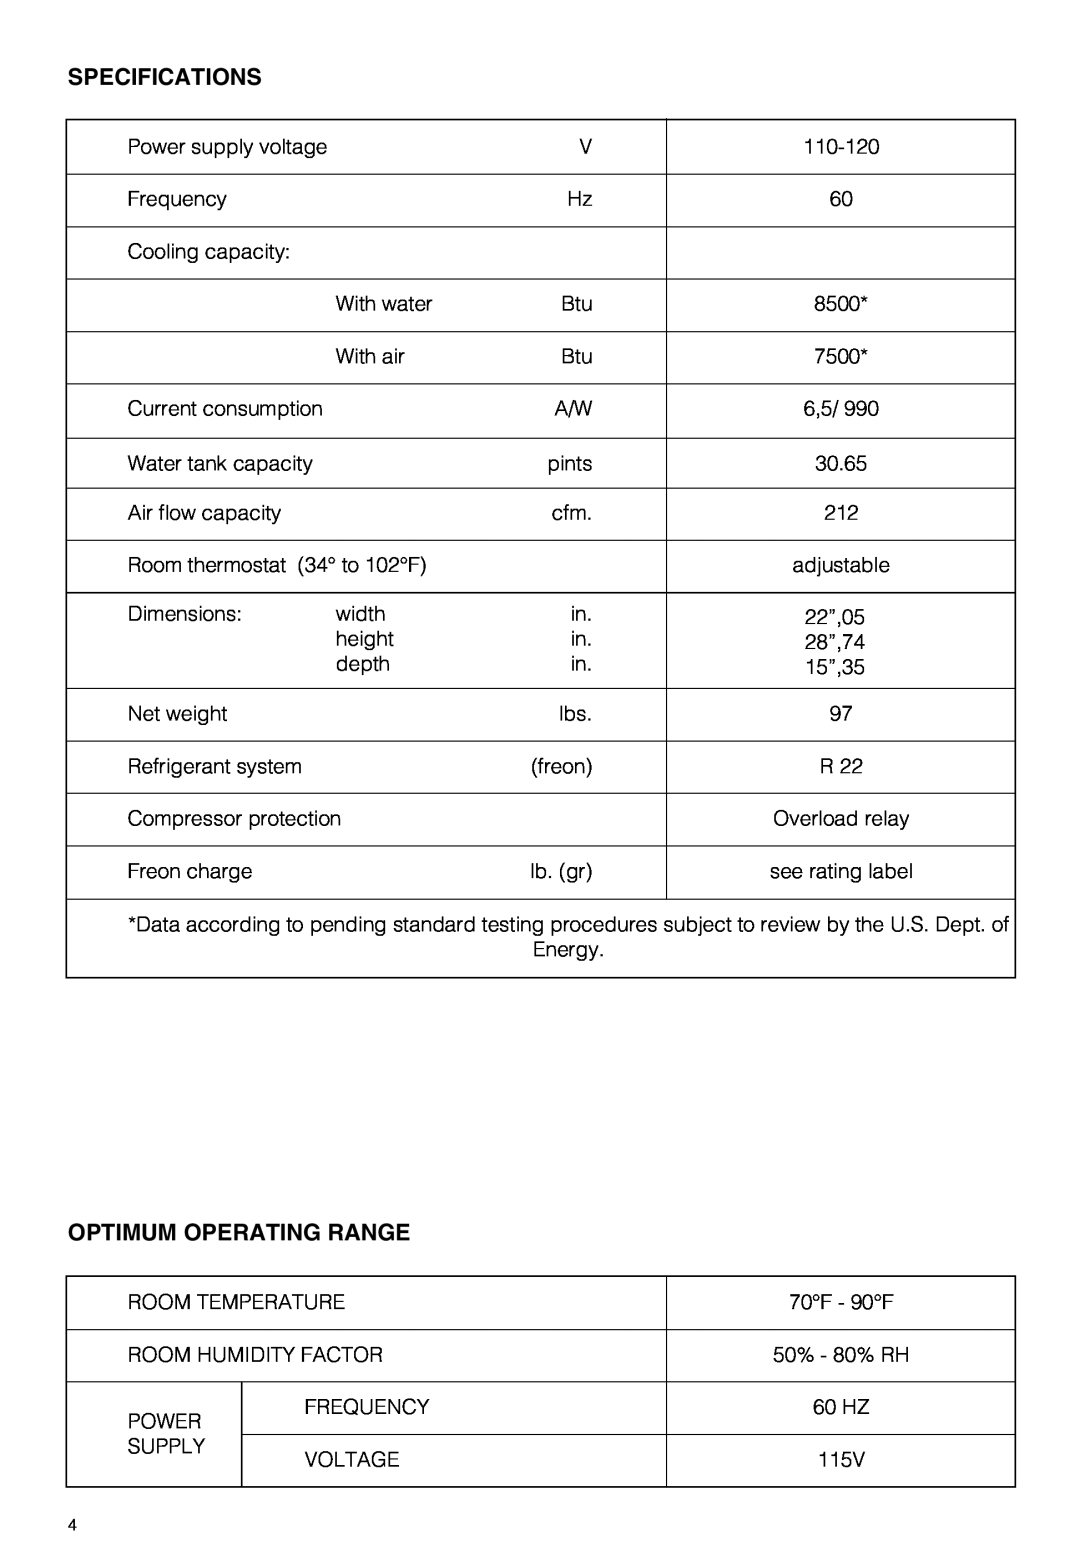 DeLonghi PAC 290 U owner manual Specifications, Optimum Operating Range 